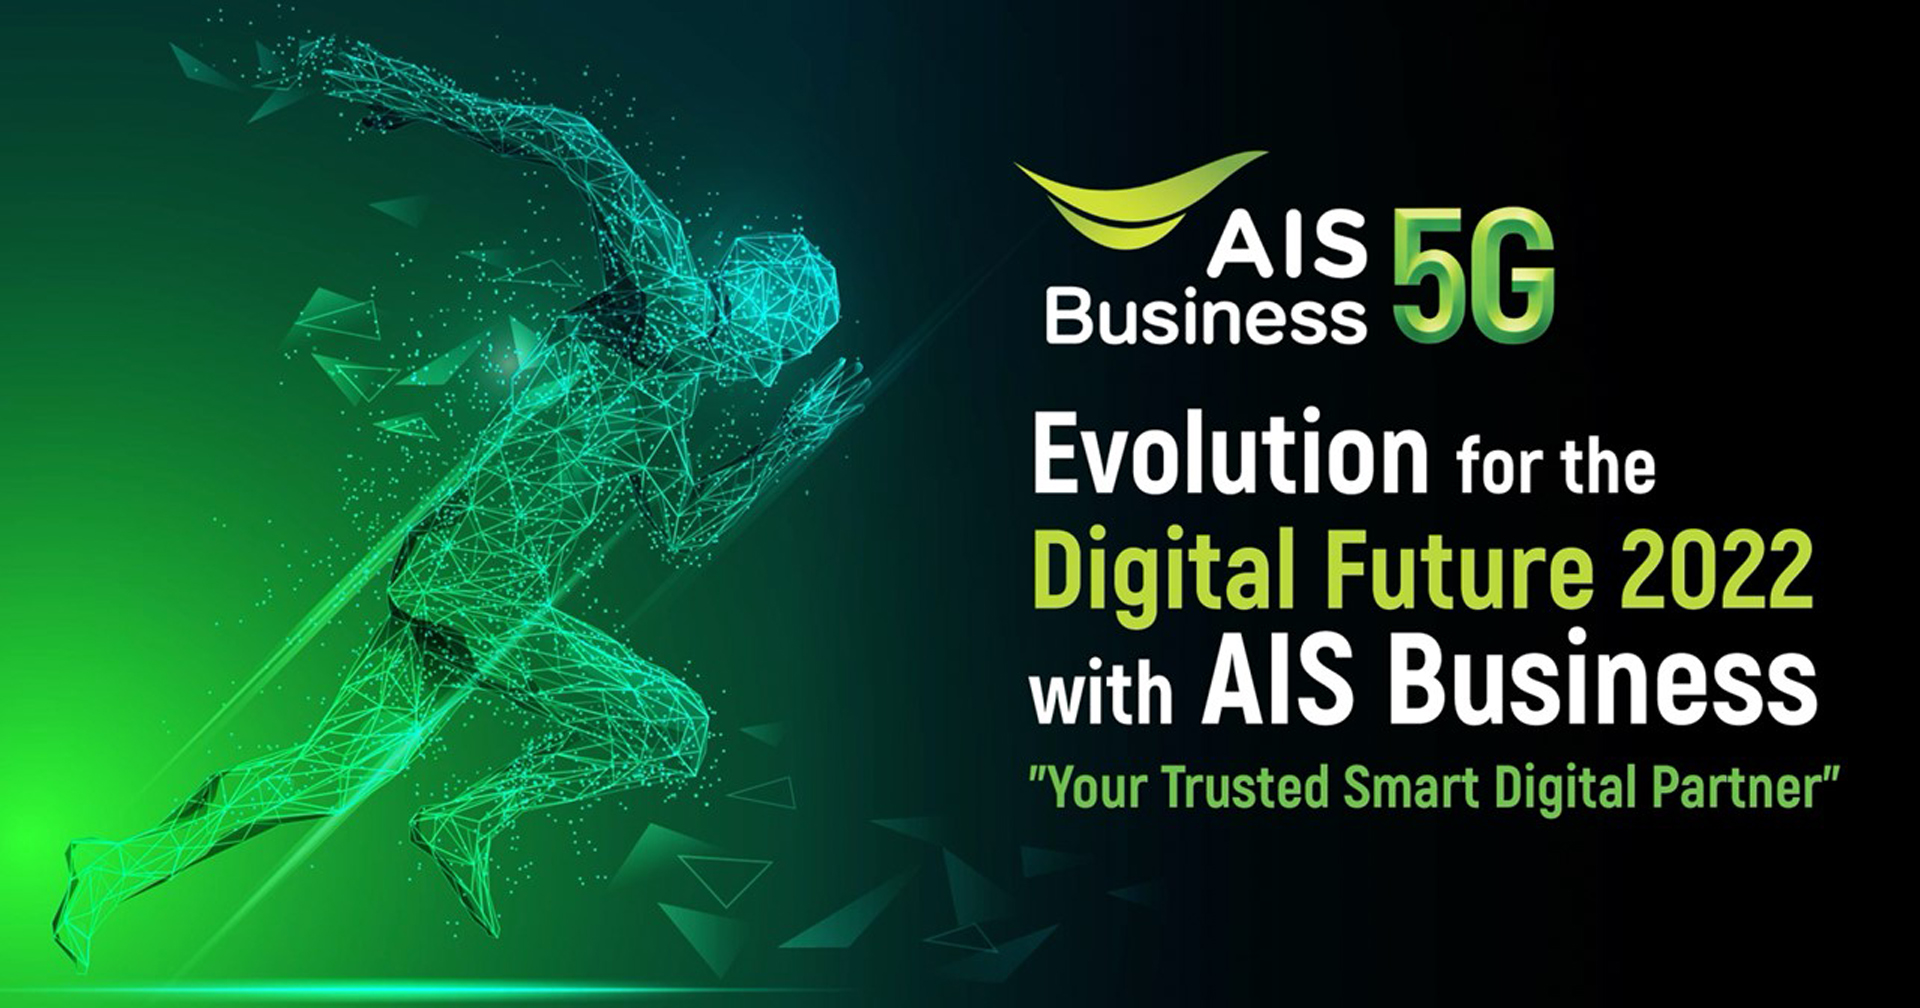 AIS Business กางแผนวิสัยทัศน์ 2022 ปักหมุดเป้าหมาย Cognitive Telco เชื่อมต่อโครงข่ายอัจฉริยะ 5G